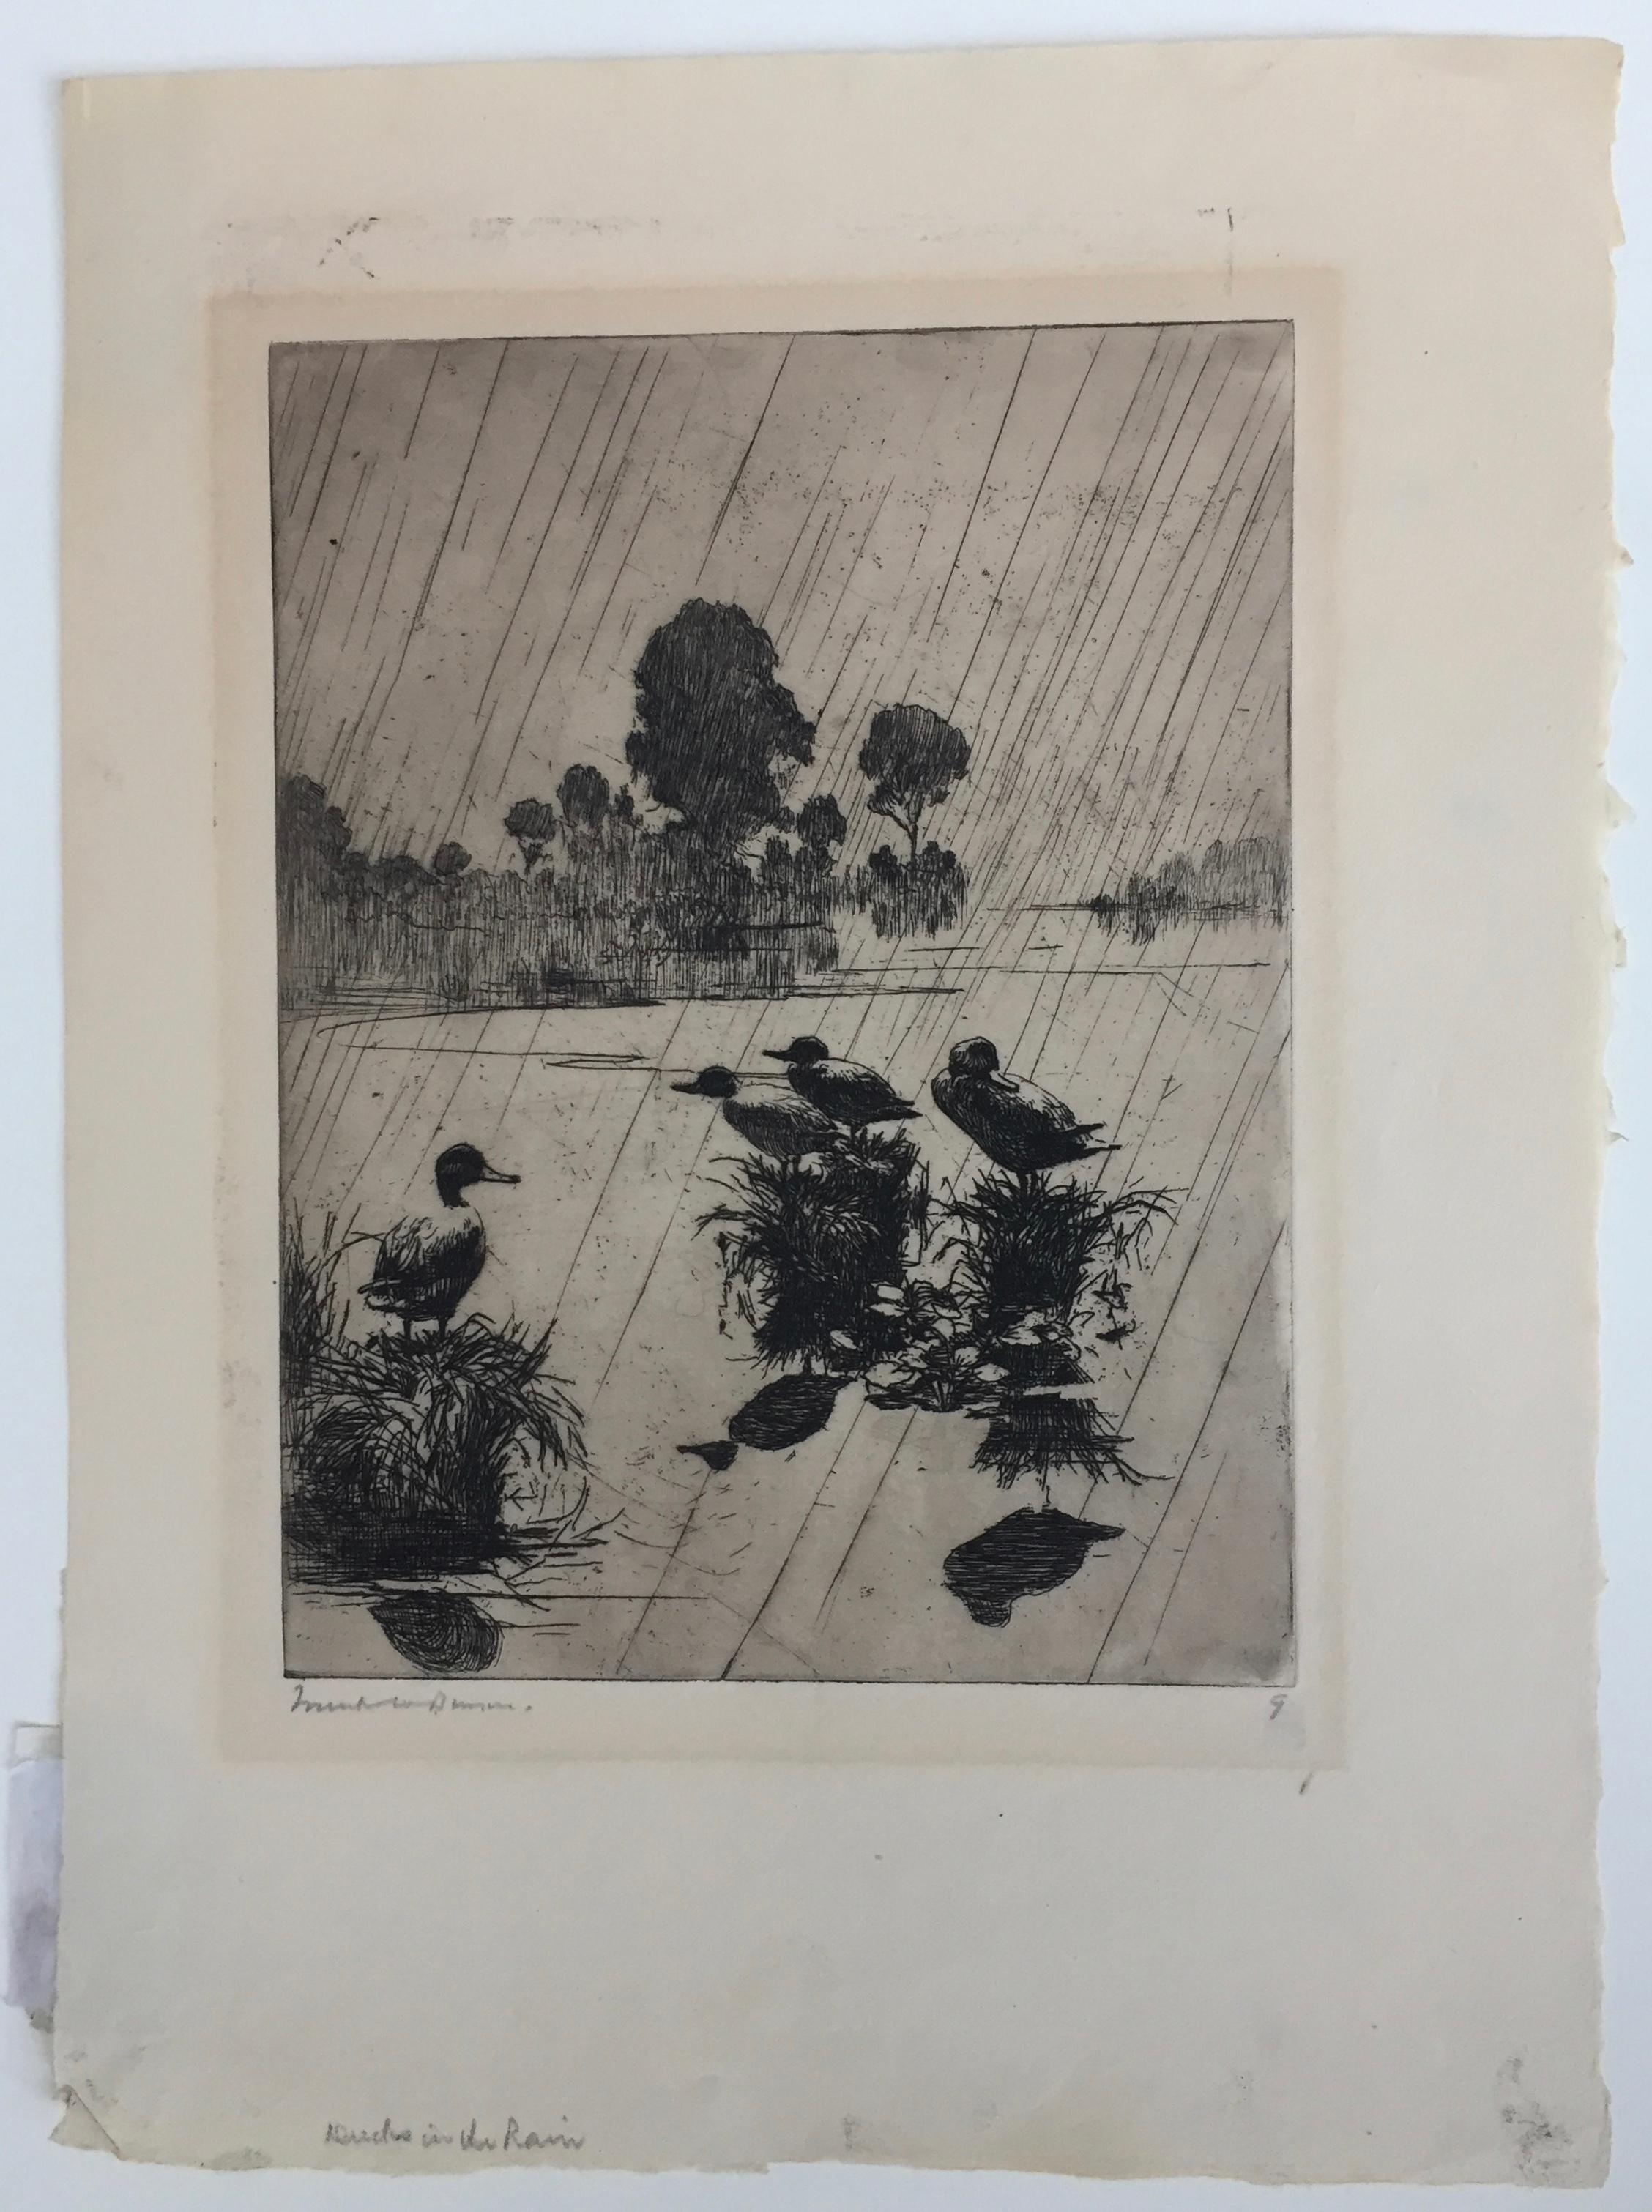 Ducks in the Rain - Print by Frank Benson